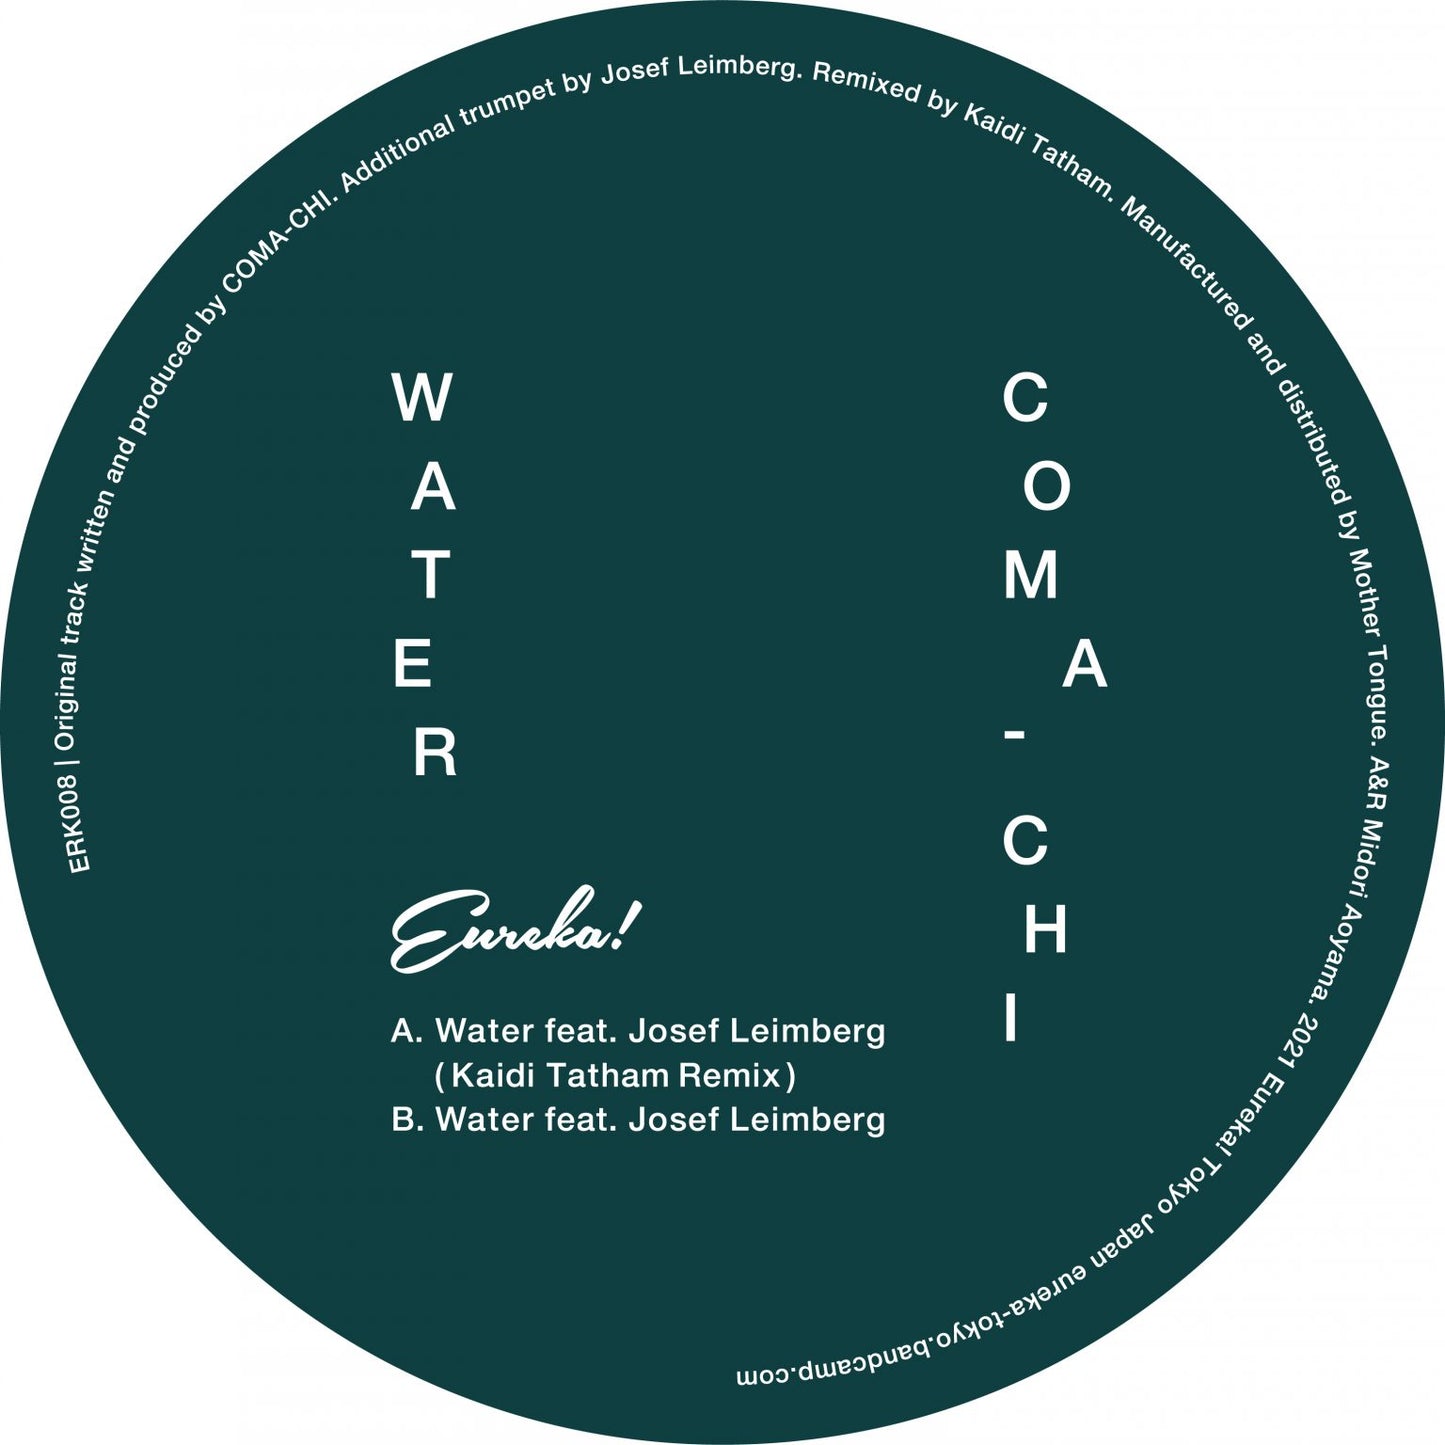 Coma-Chi - Water (incl. Kaidi Tatham Remix) [ERK008]